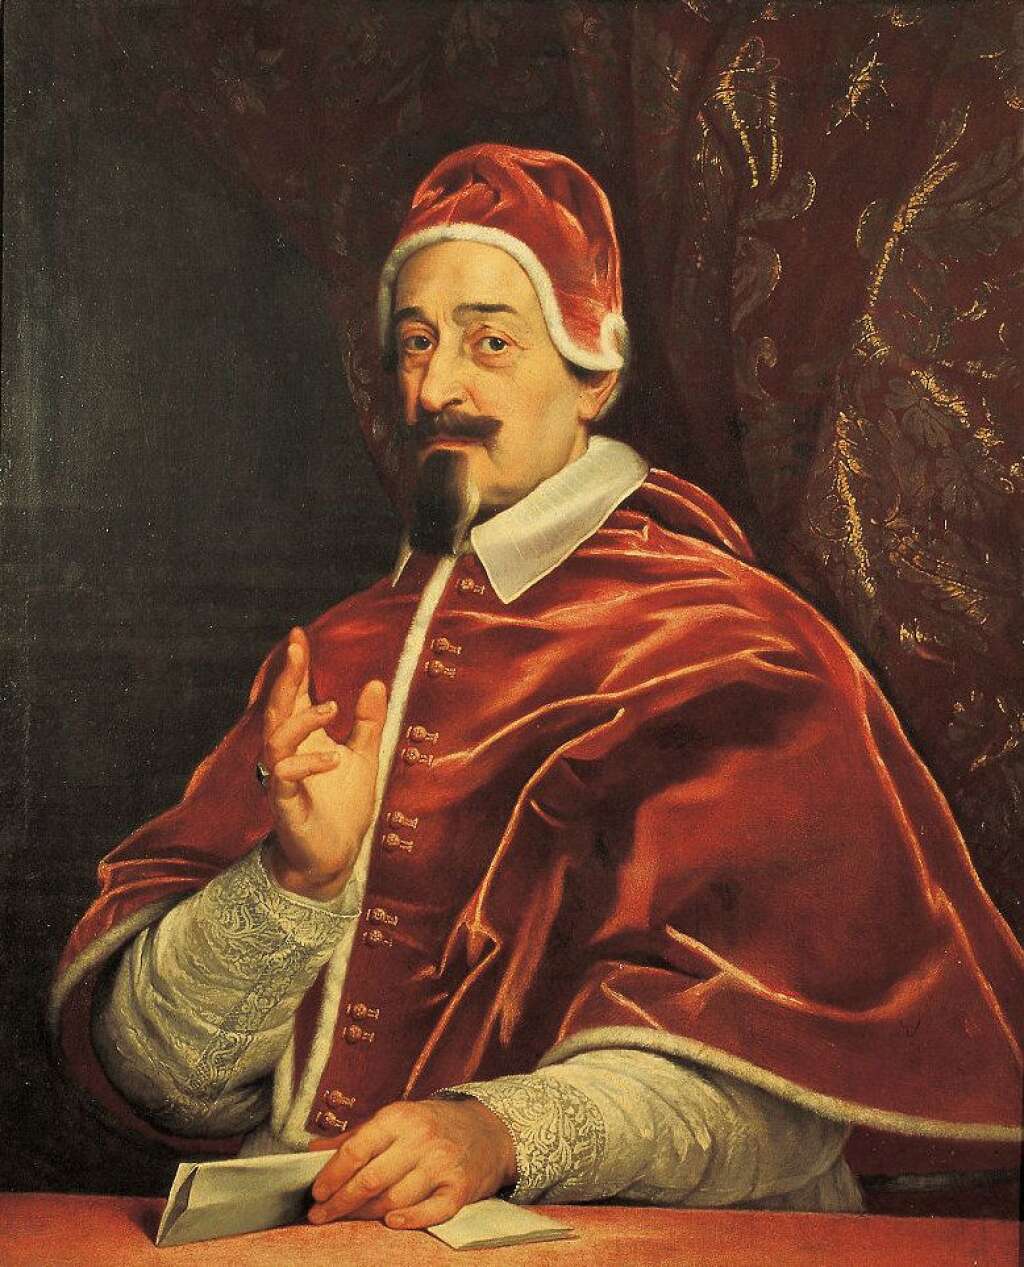 Alexandre VII - April 7, 1655 – May 22, 1667